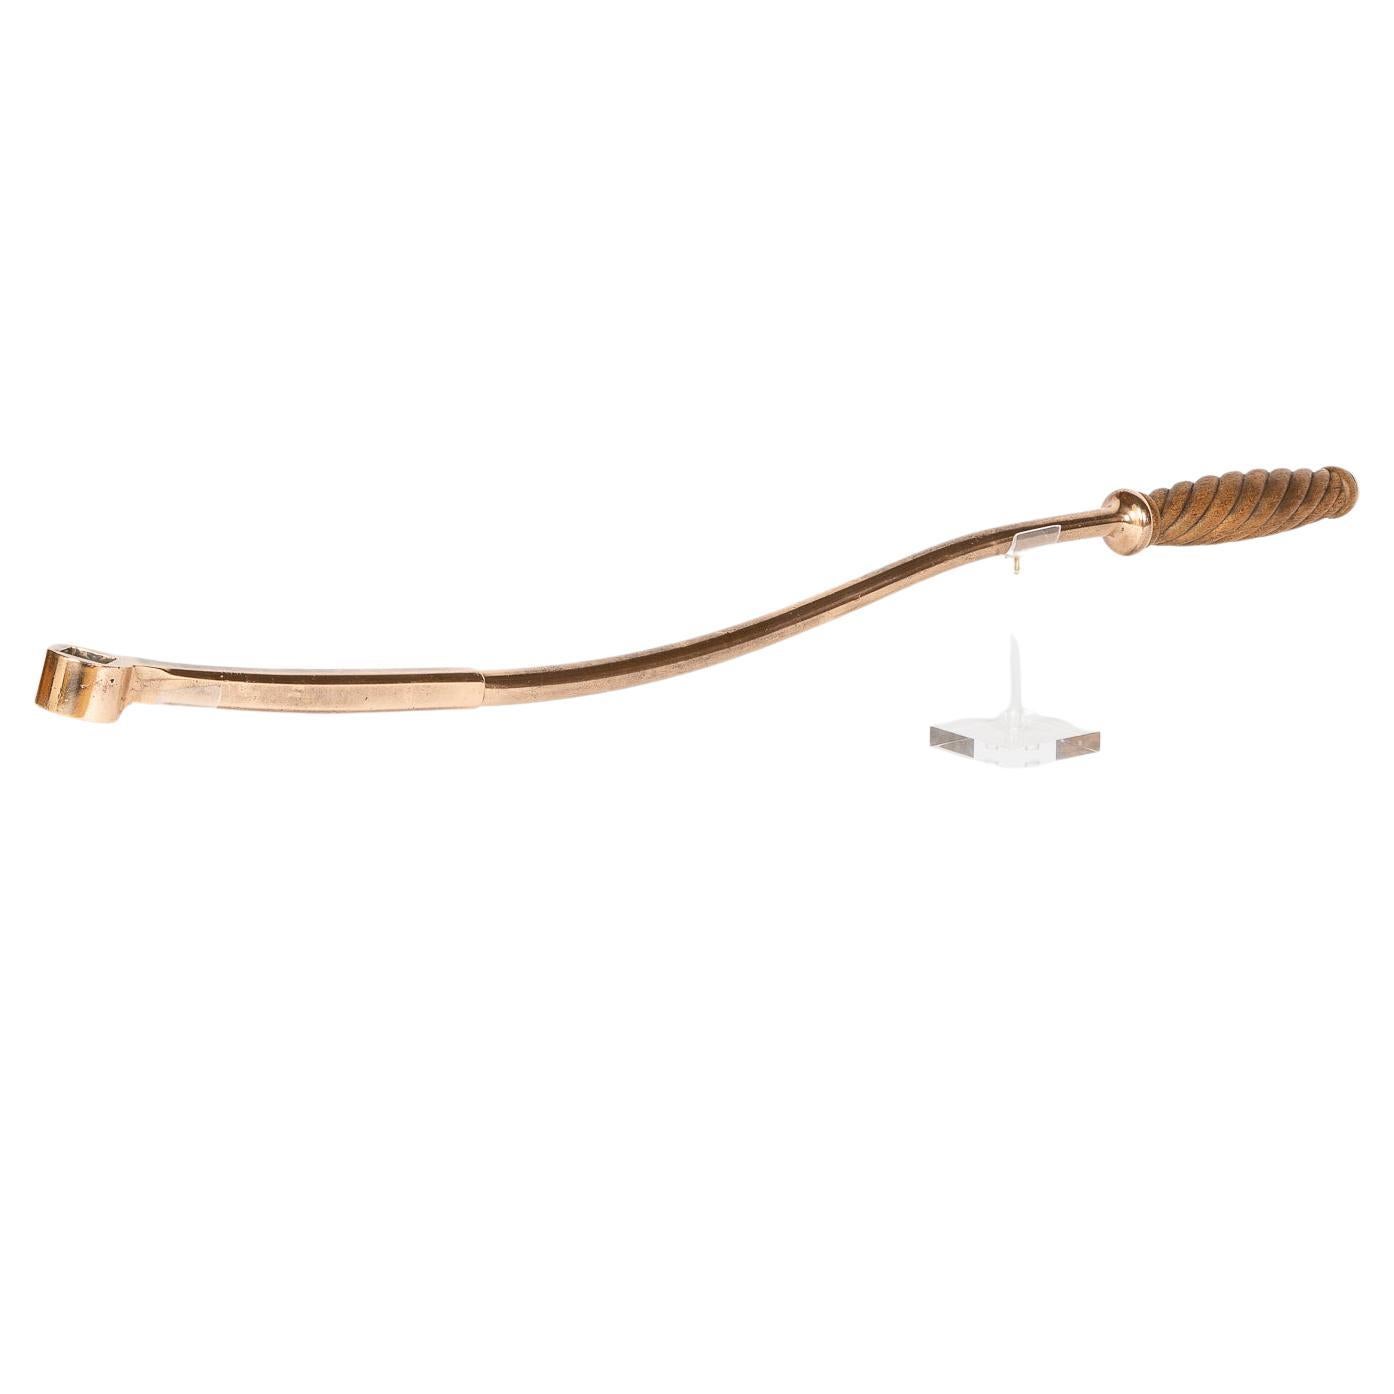 Bronze Rudder Tiller Arm with Rope Twist Handle